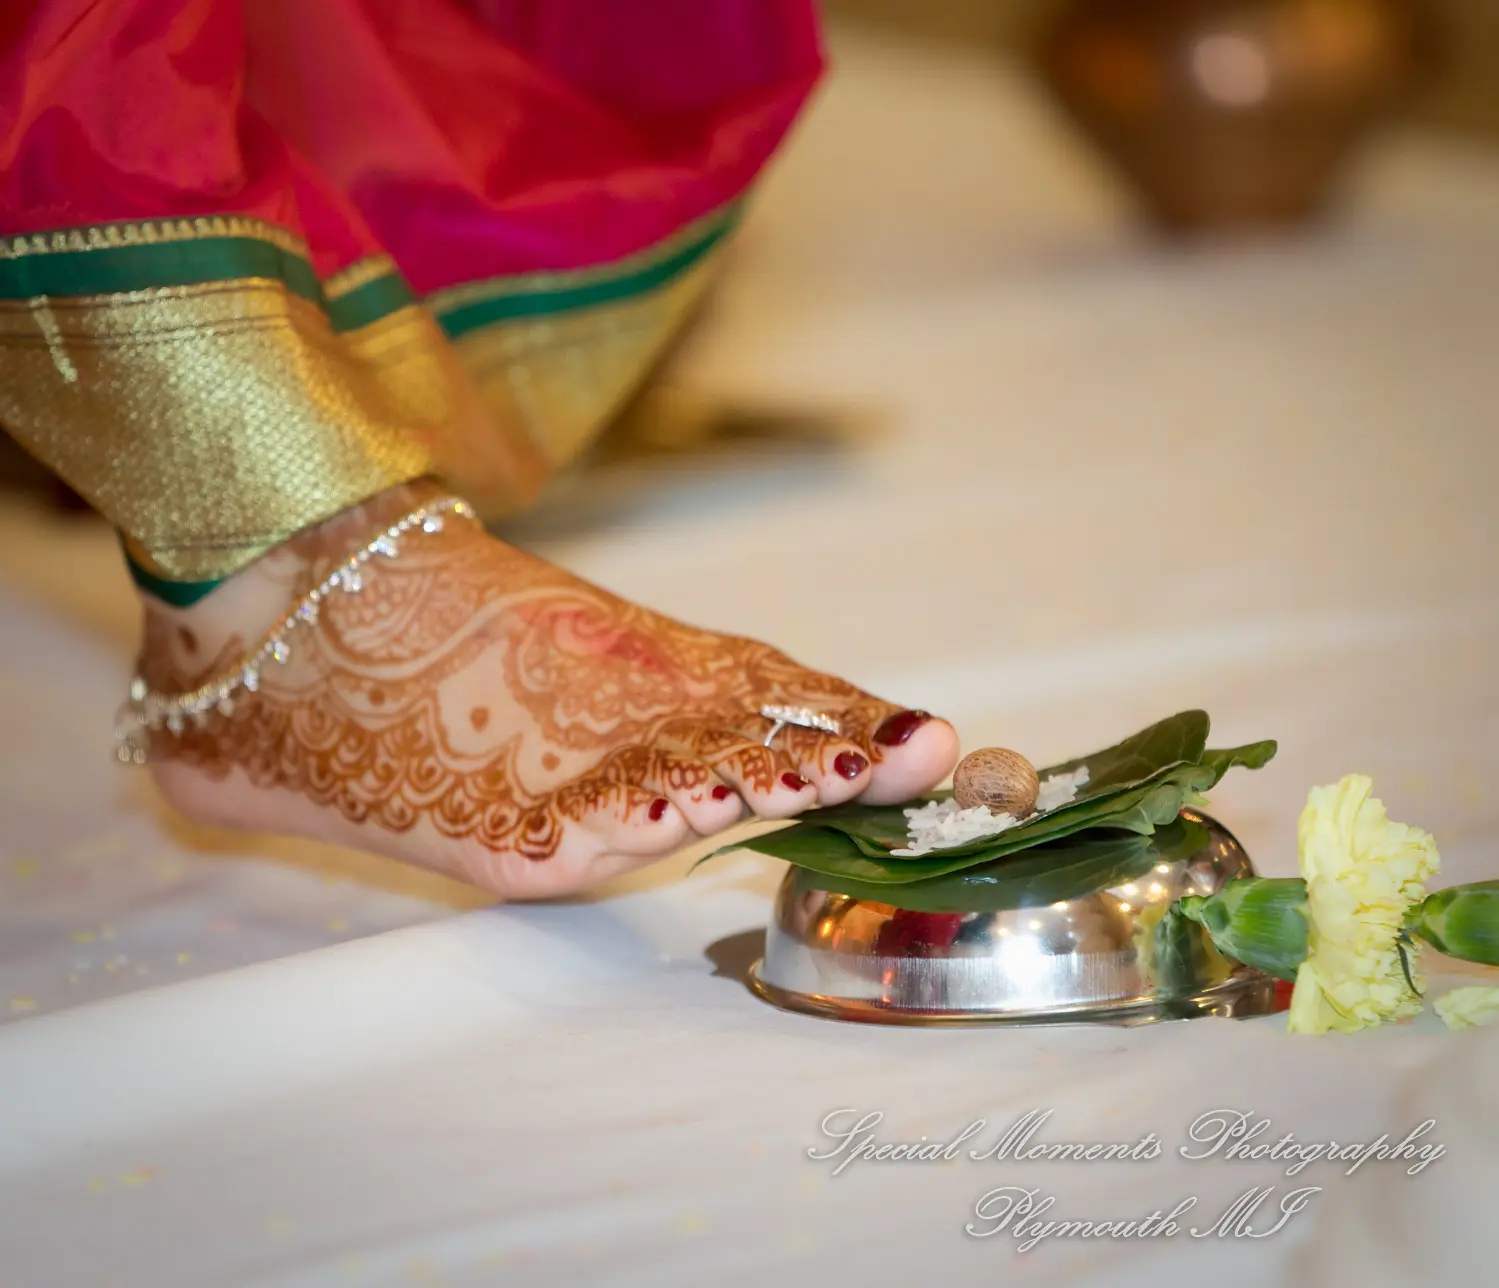 Bharatiya Temple Troy MI wedding photograph